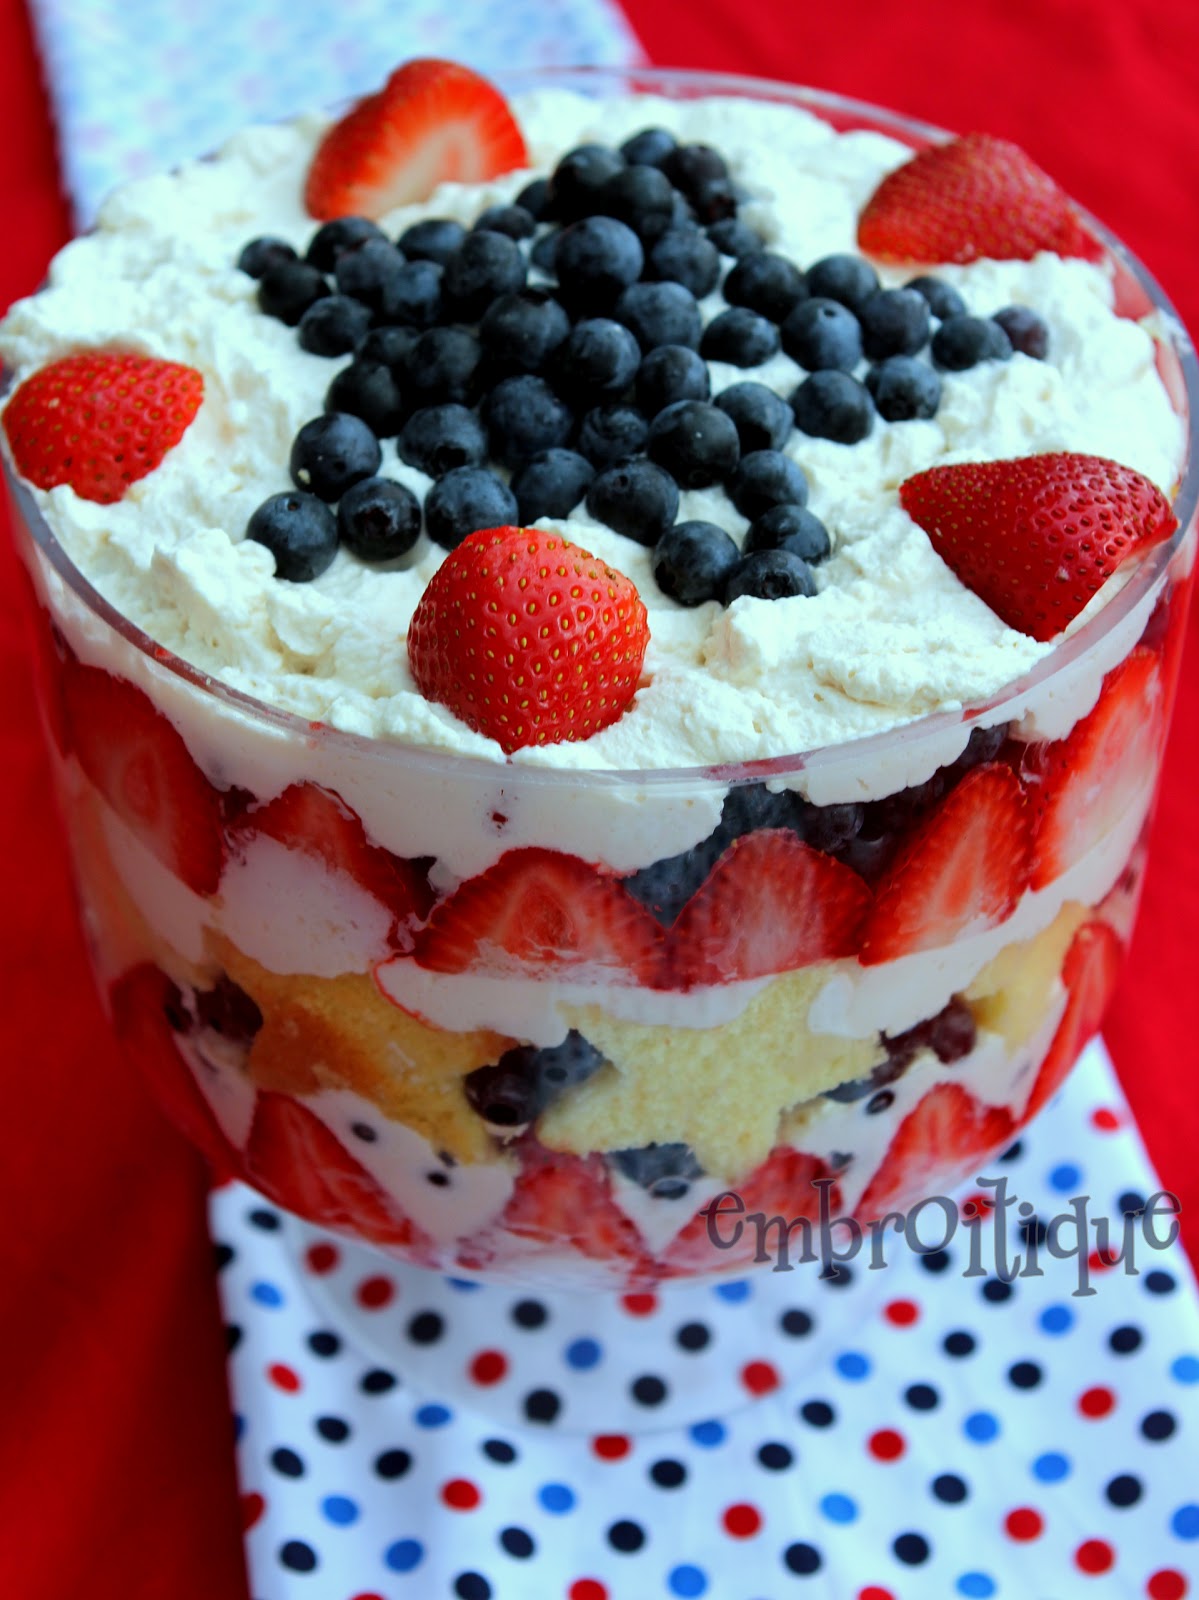 embroitique.com: Easy Summer Dessert - Fruit and cream and ...